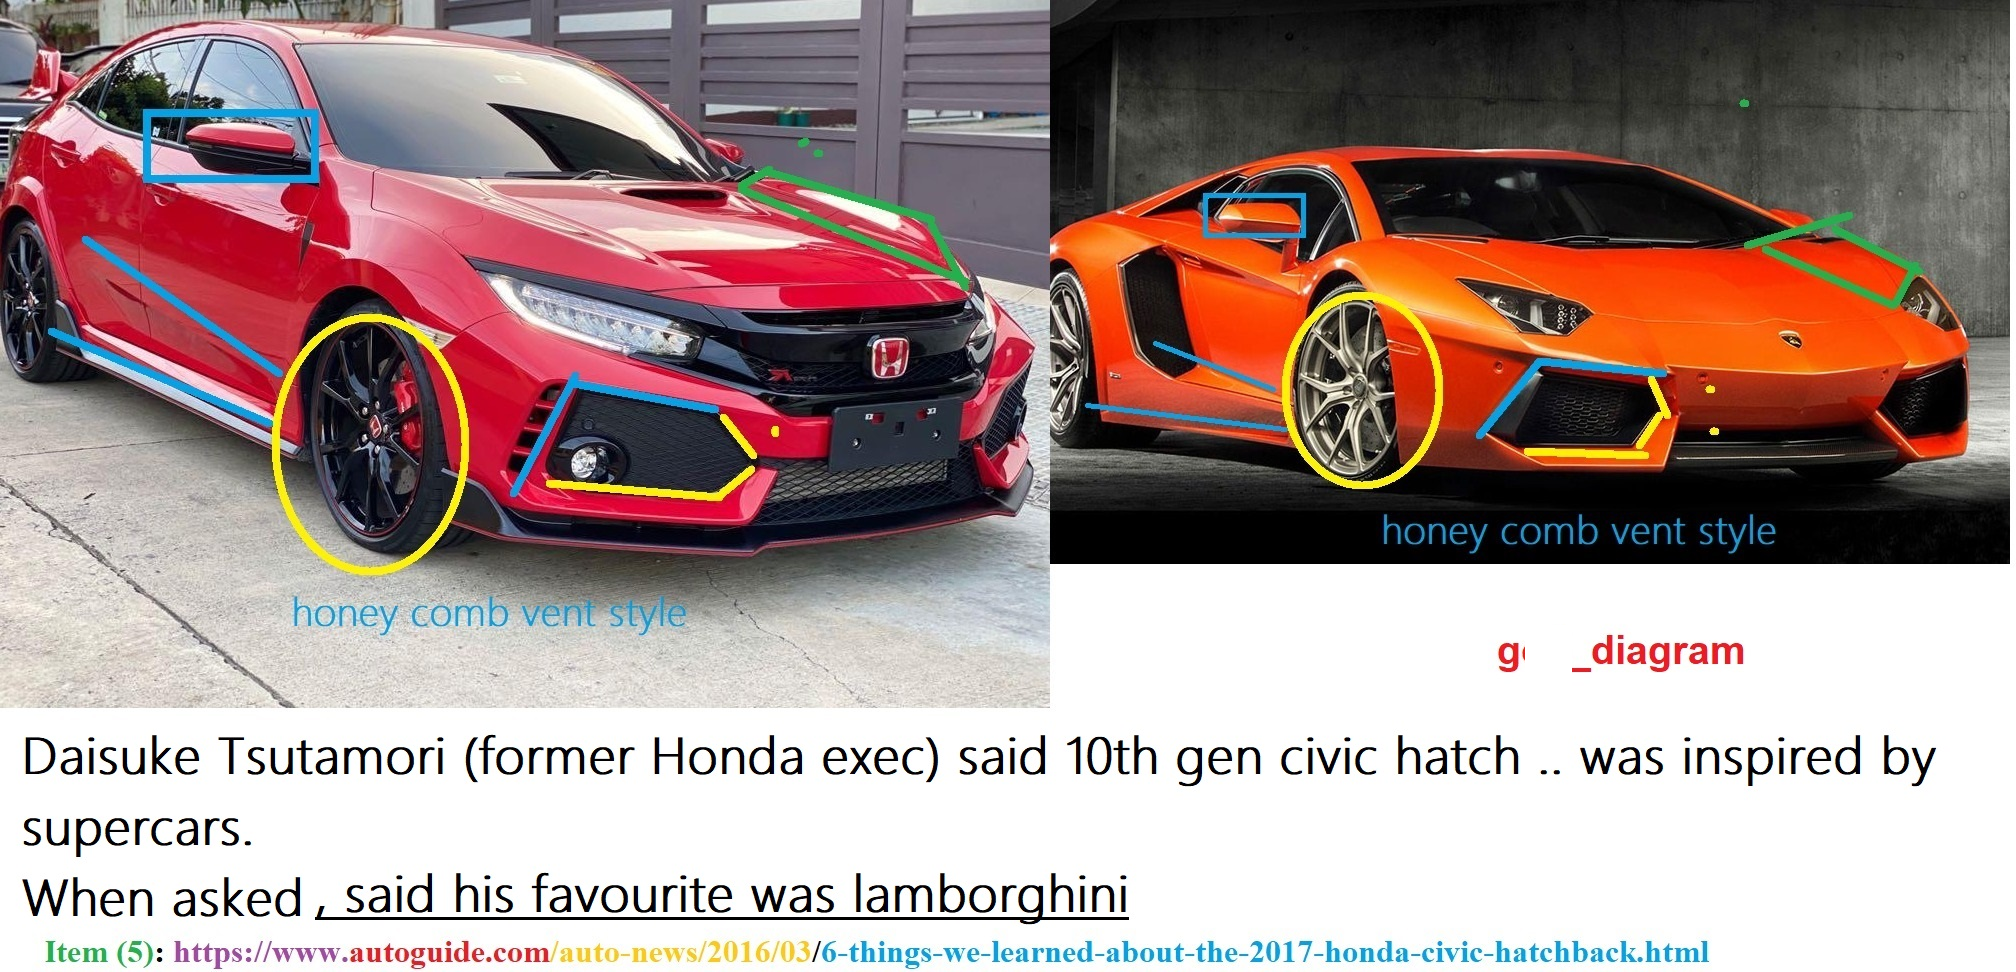 11th Gen Honda Civic Fl5 rear reminds me of Toyota CHR SUV 1700227645006